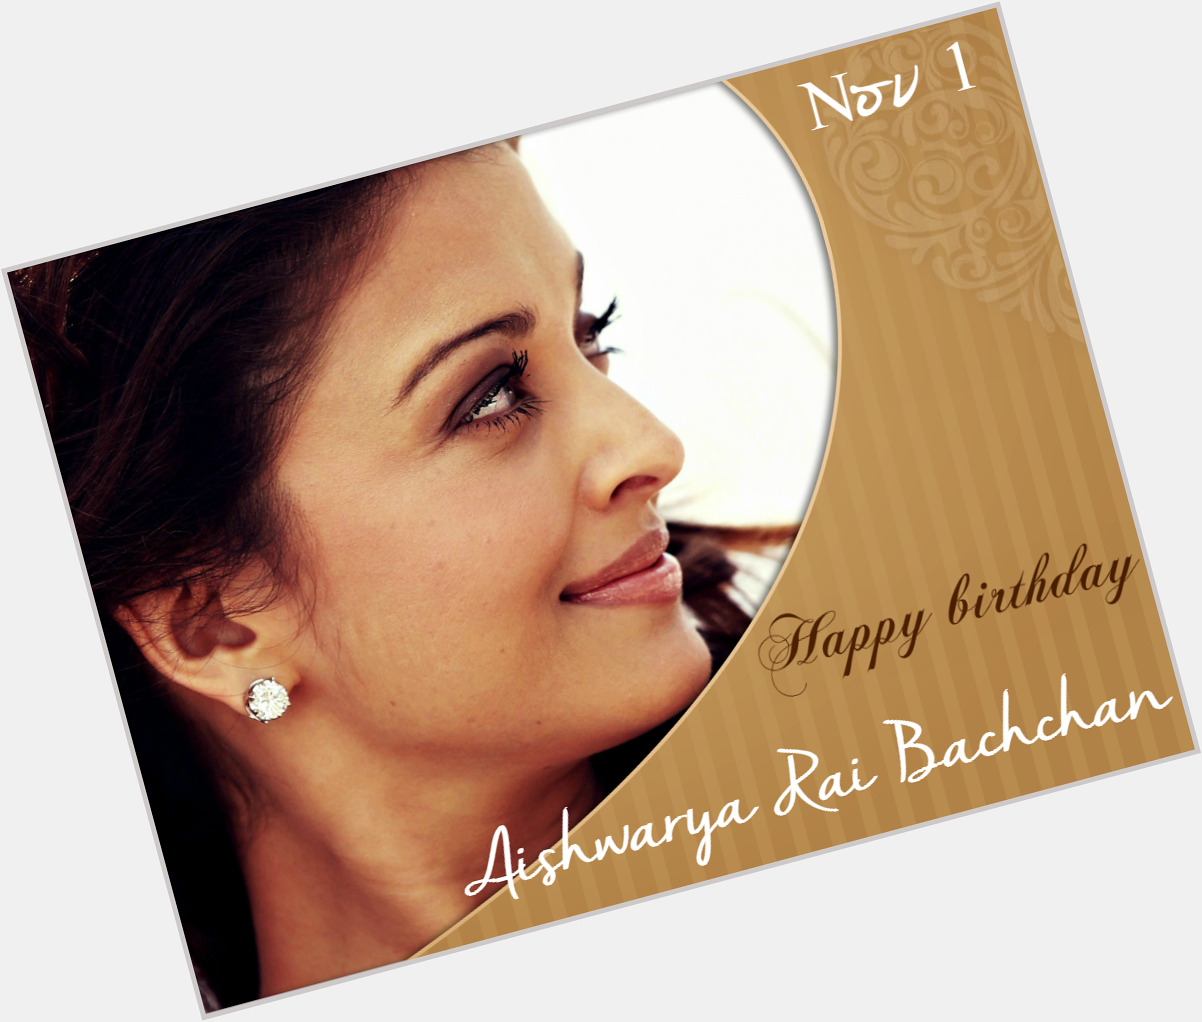 Wishing Aishwarya Rai Bachchan a very Happy Birthday on behalf of  Team ShashiSumeet!! 